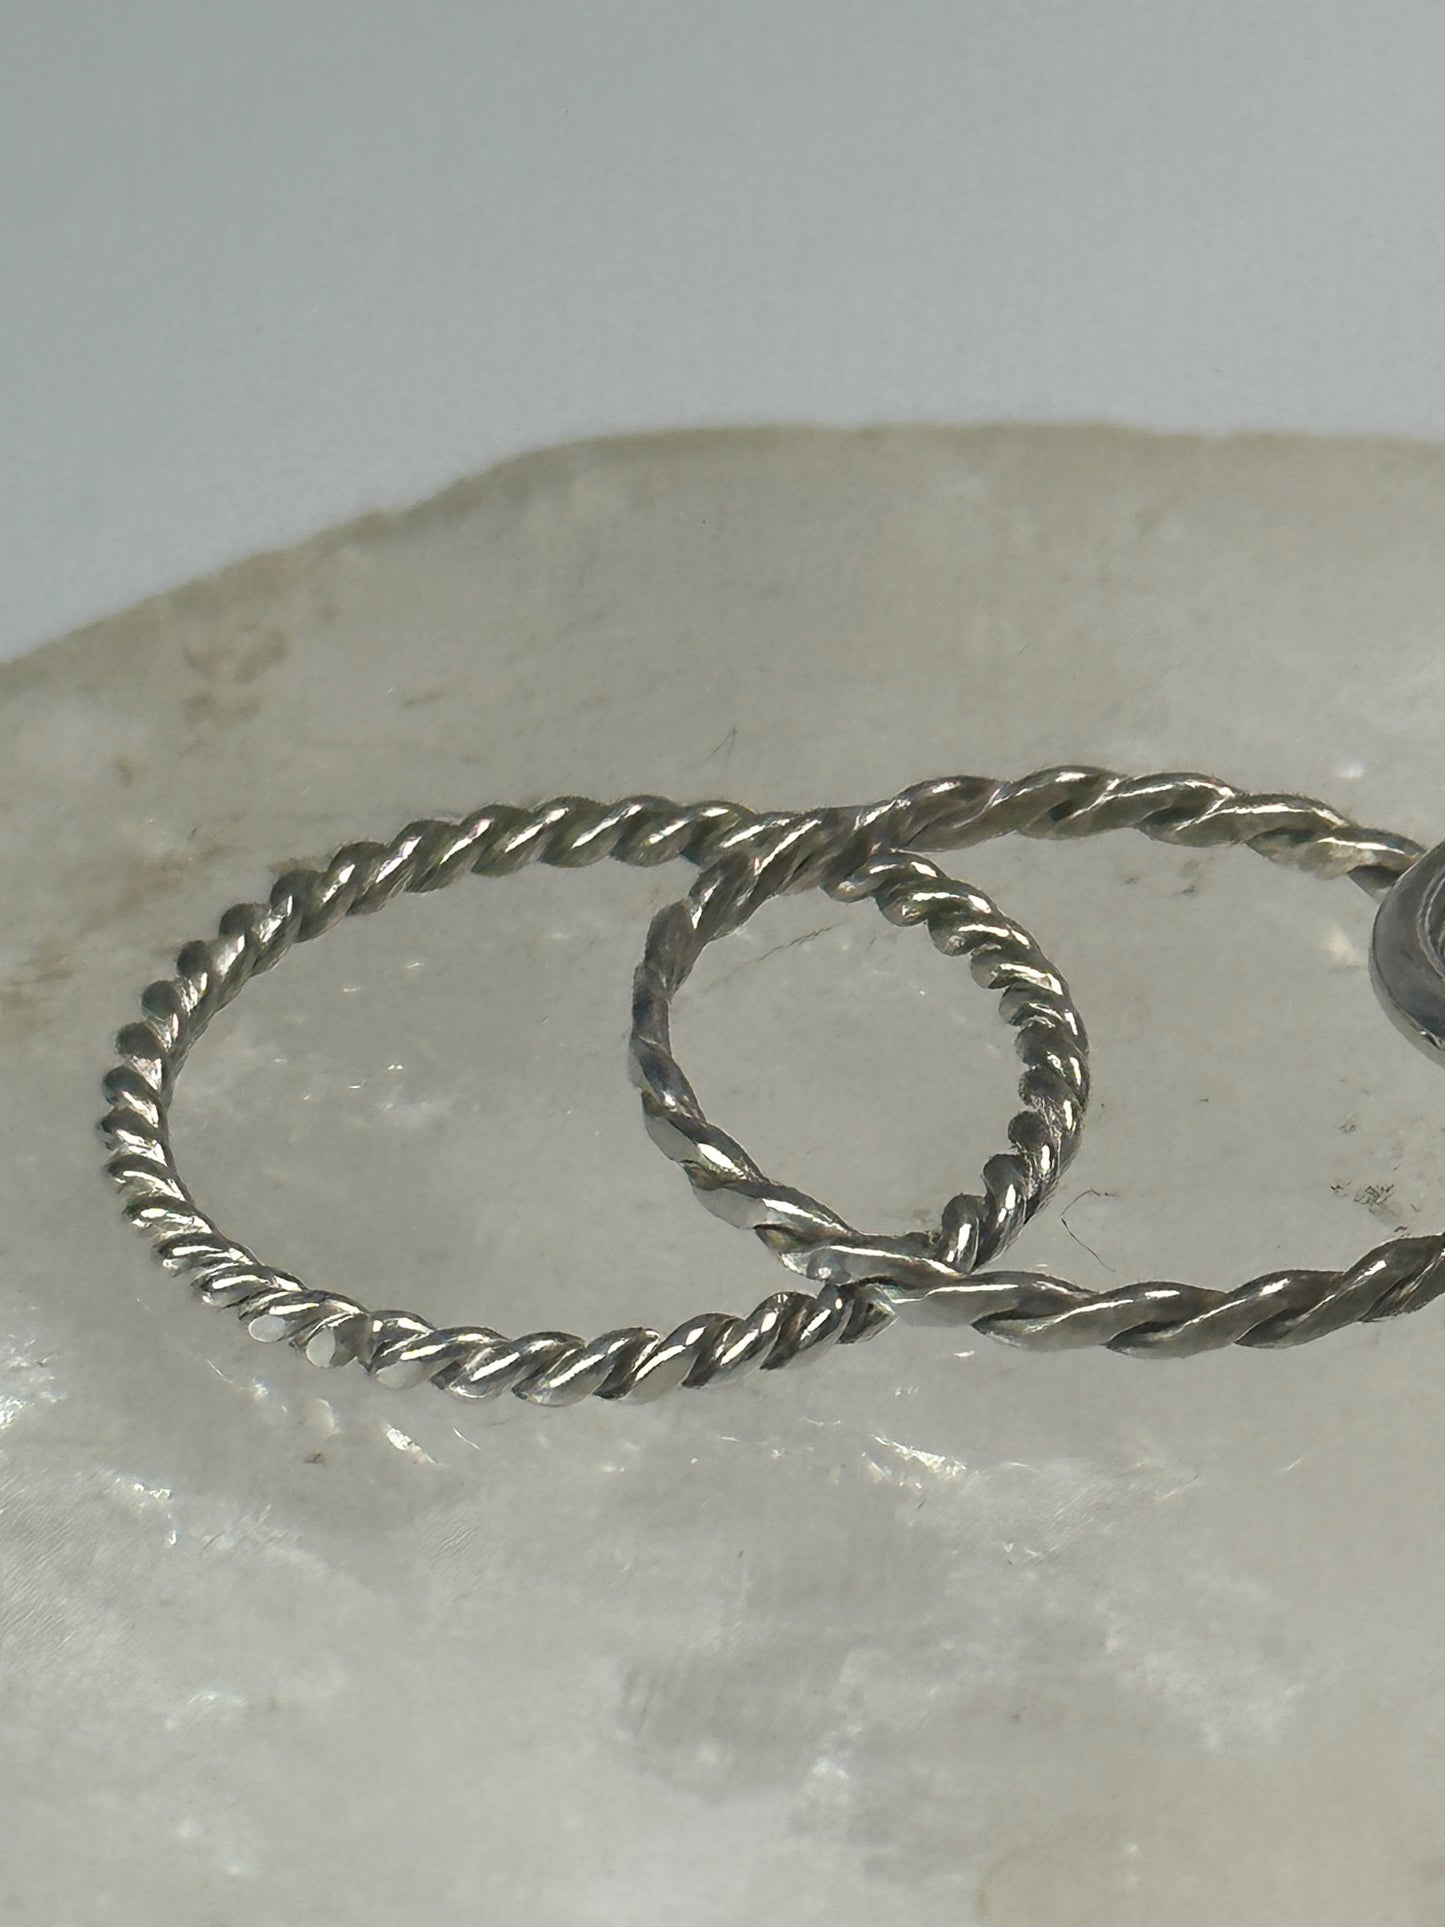 5 Slender ring stacker band size 5.50 sterling  silver women girls rings bands